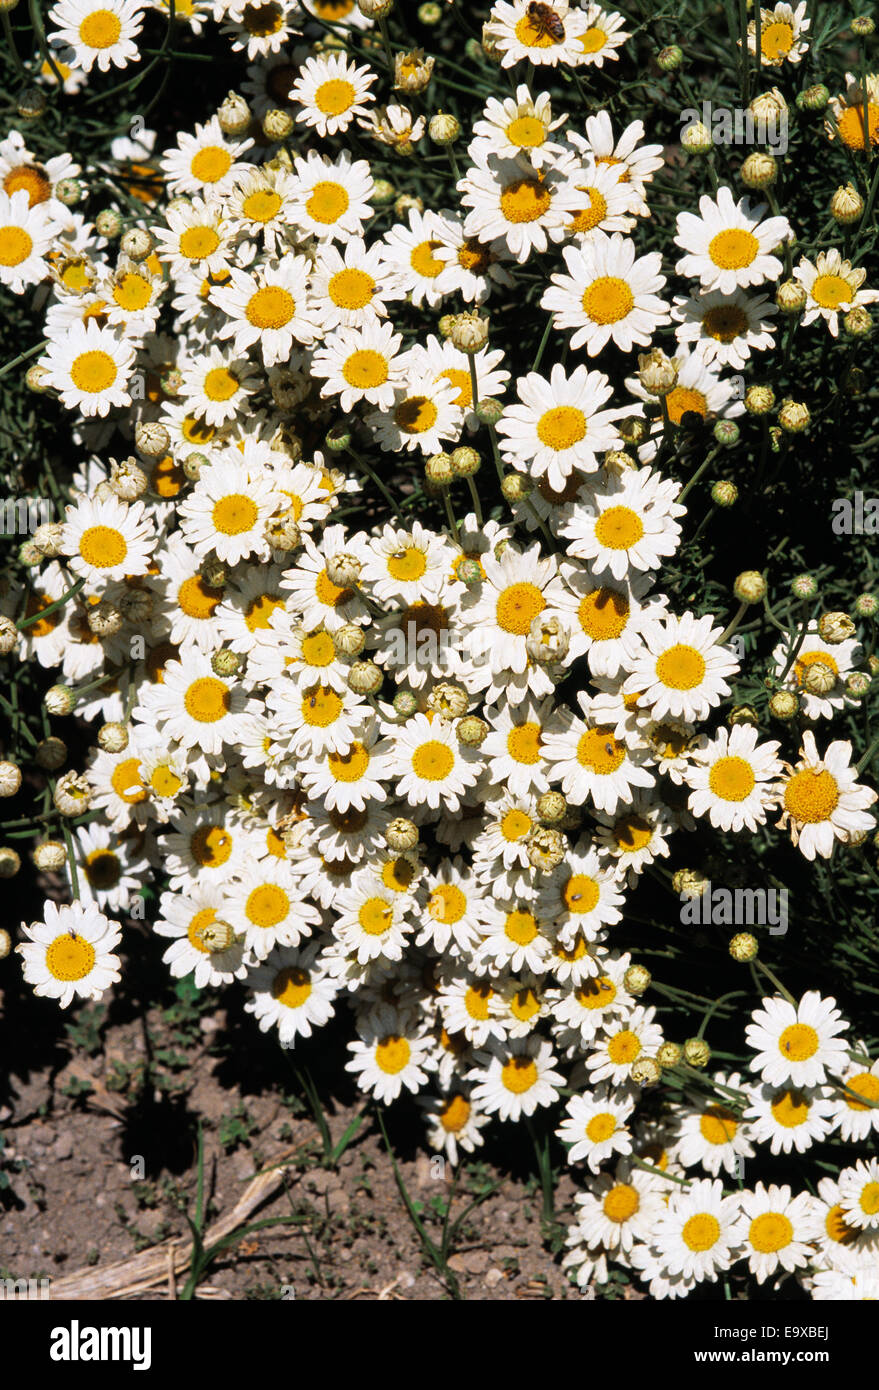 Pyrethrum flowers (Chrysan- themum cinerariaefolium), the commercial source of organic pyrethrum insecticide / California, USA. Stock Photo